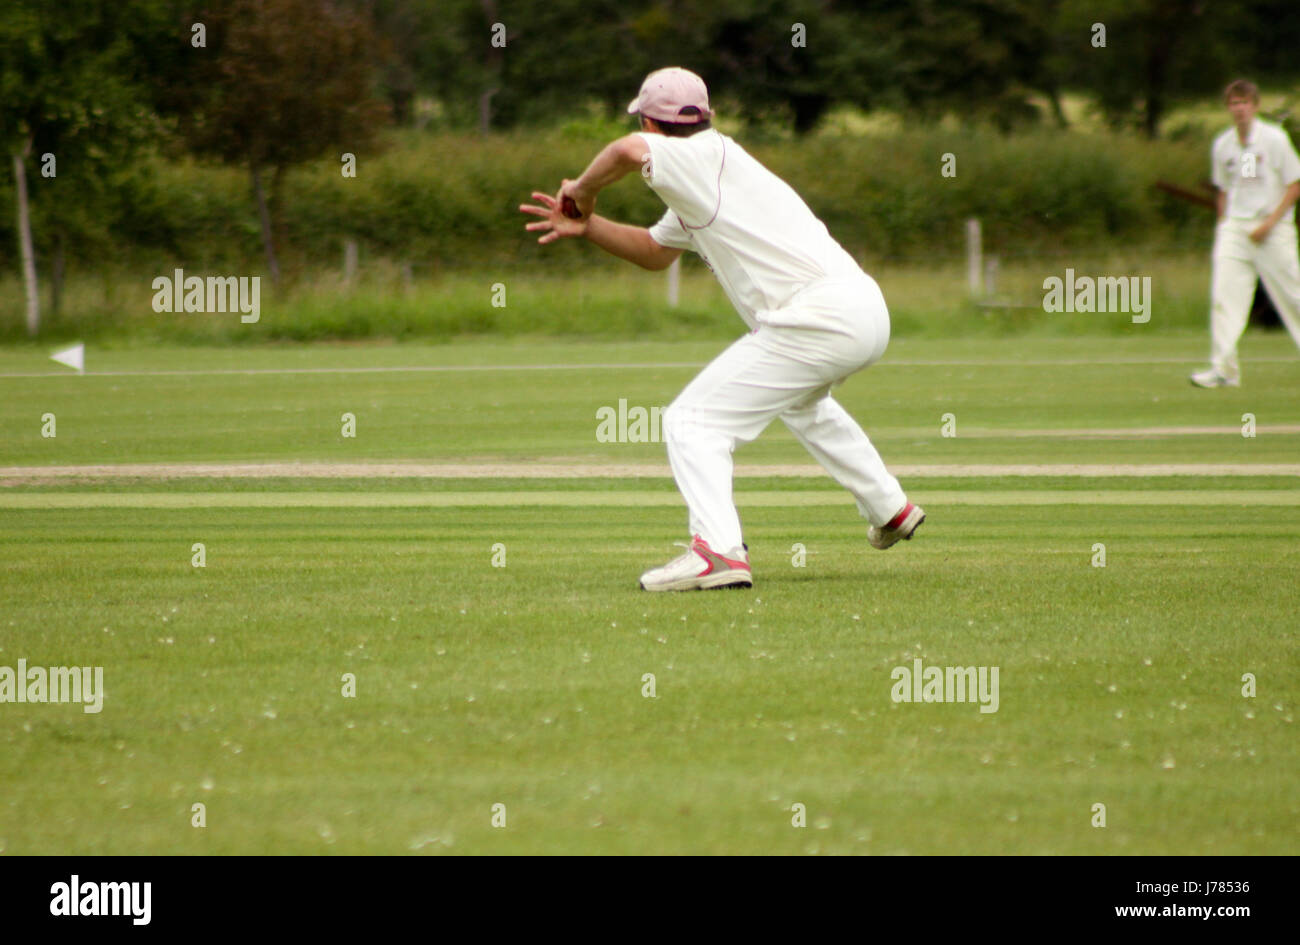 Fielder throwing a cricket ball Stock Photo